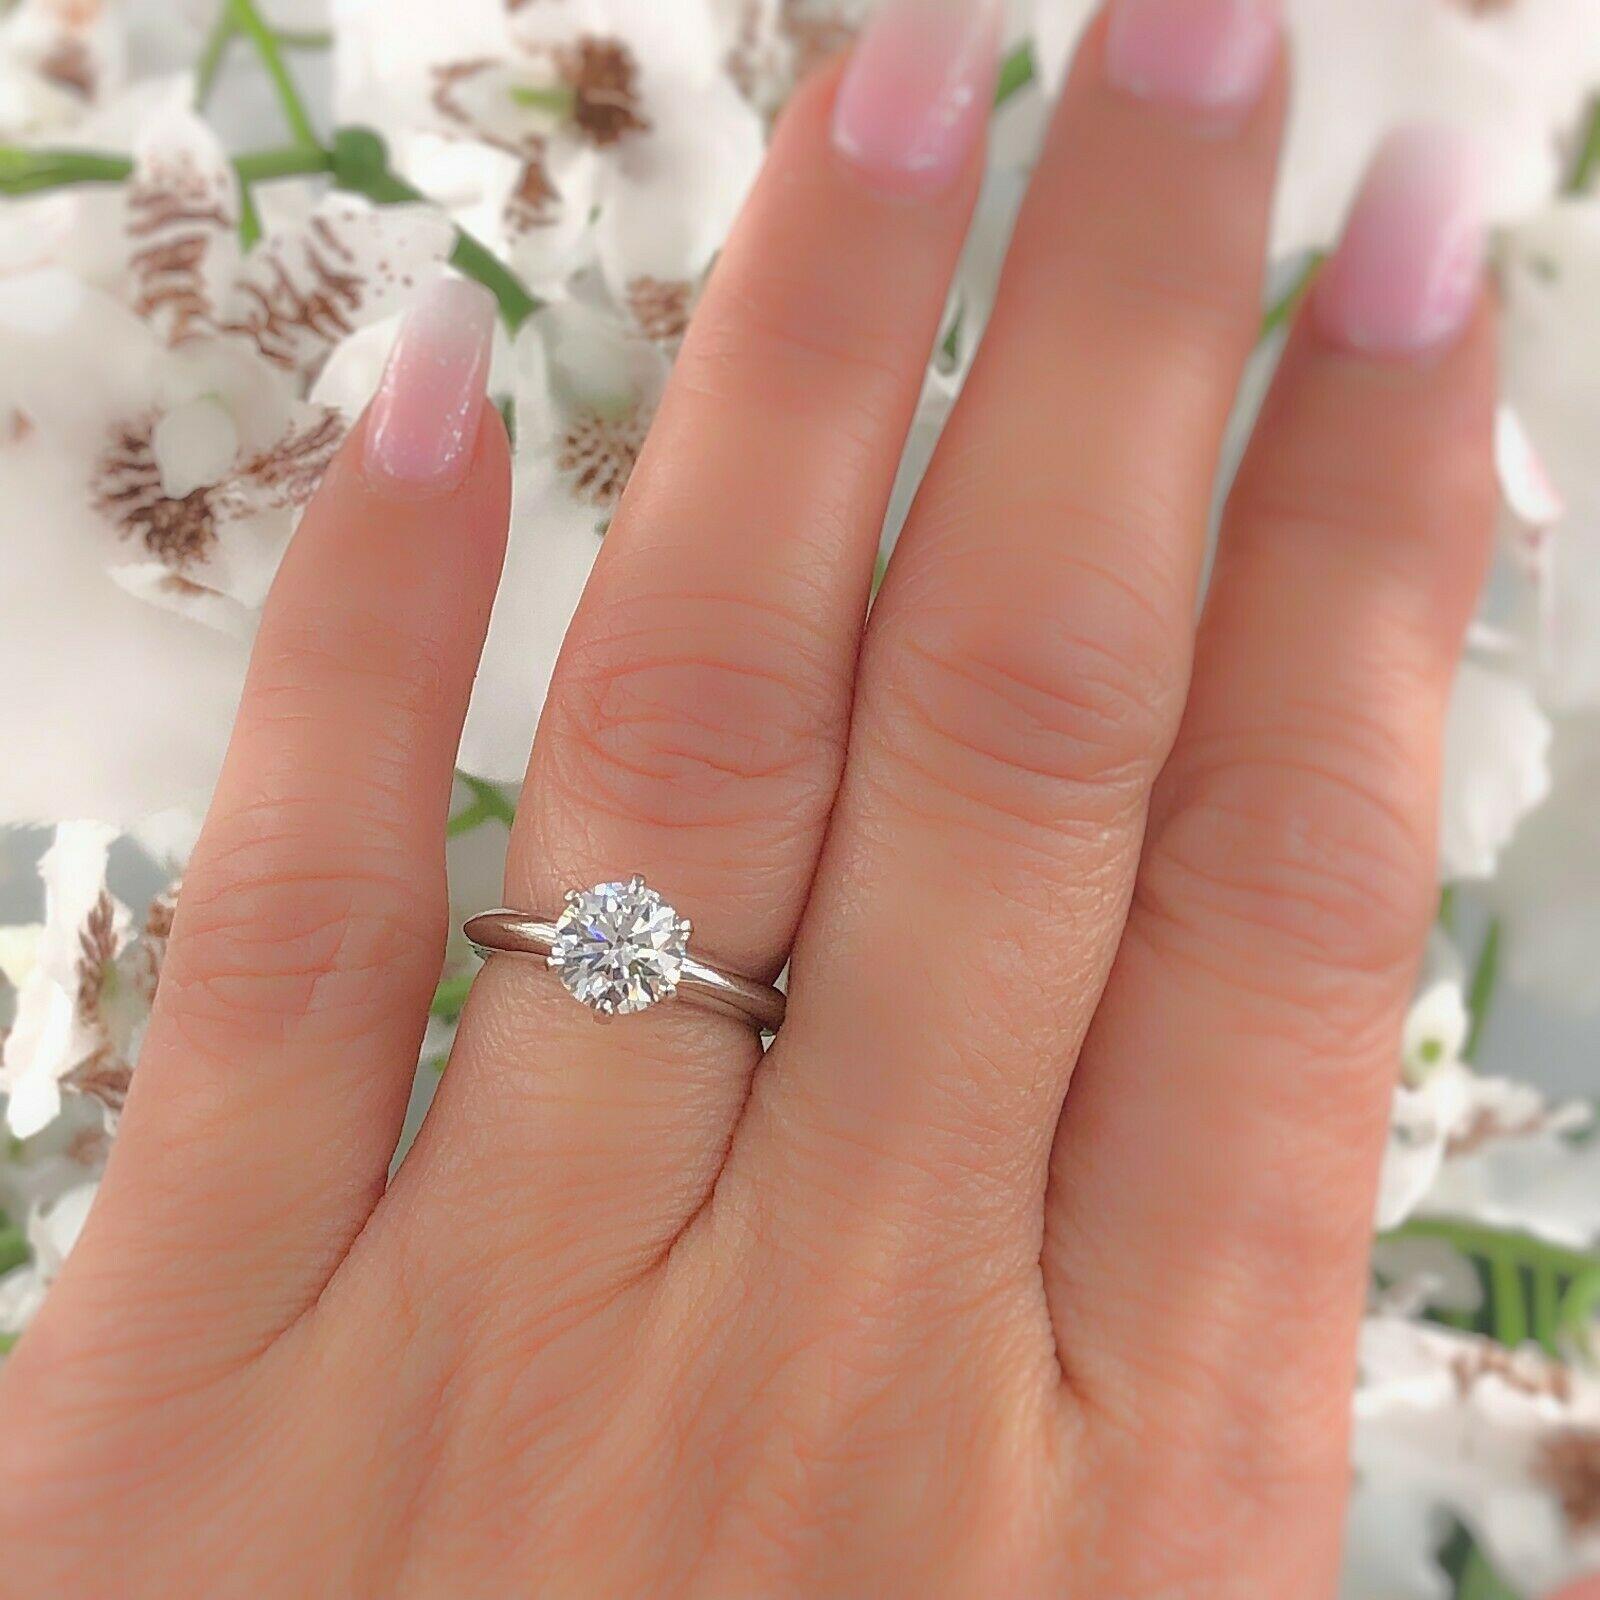 tiffany's 3 carat engagement ring